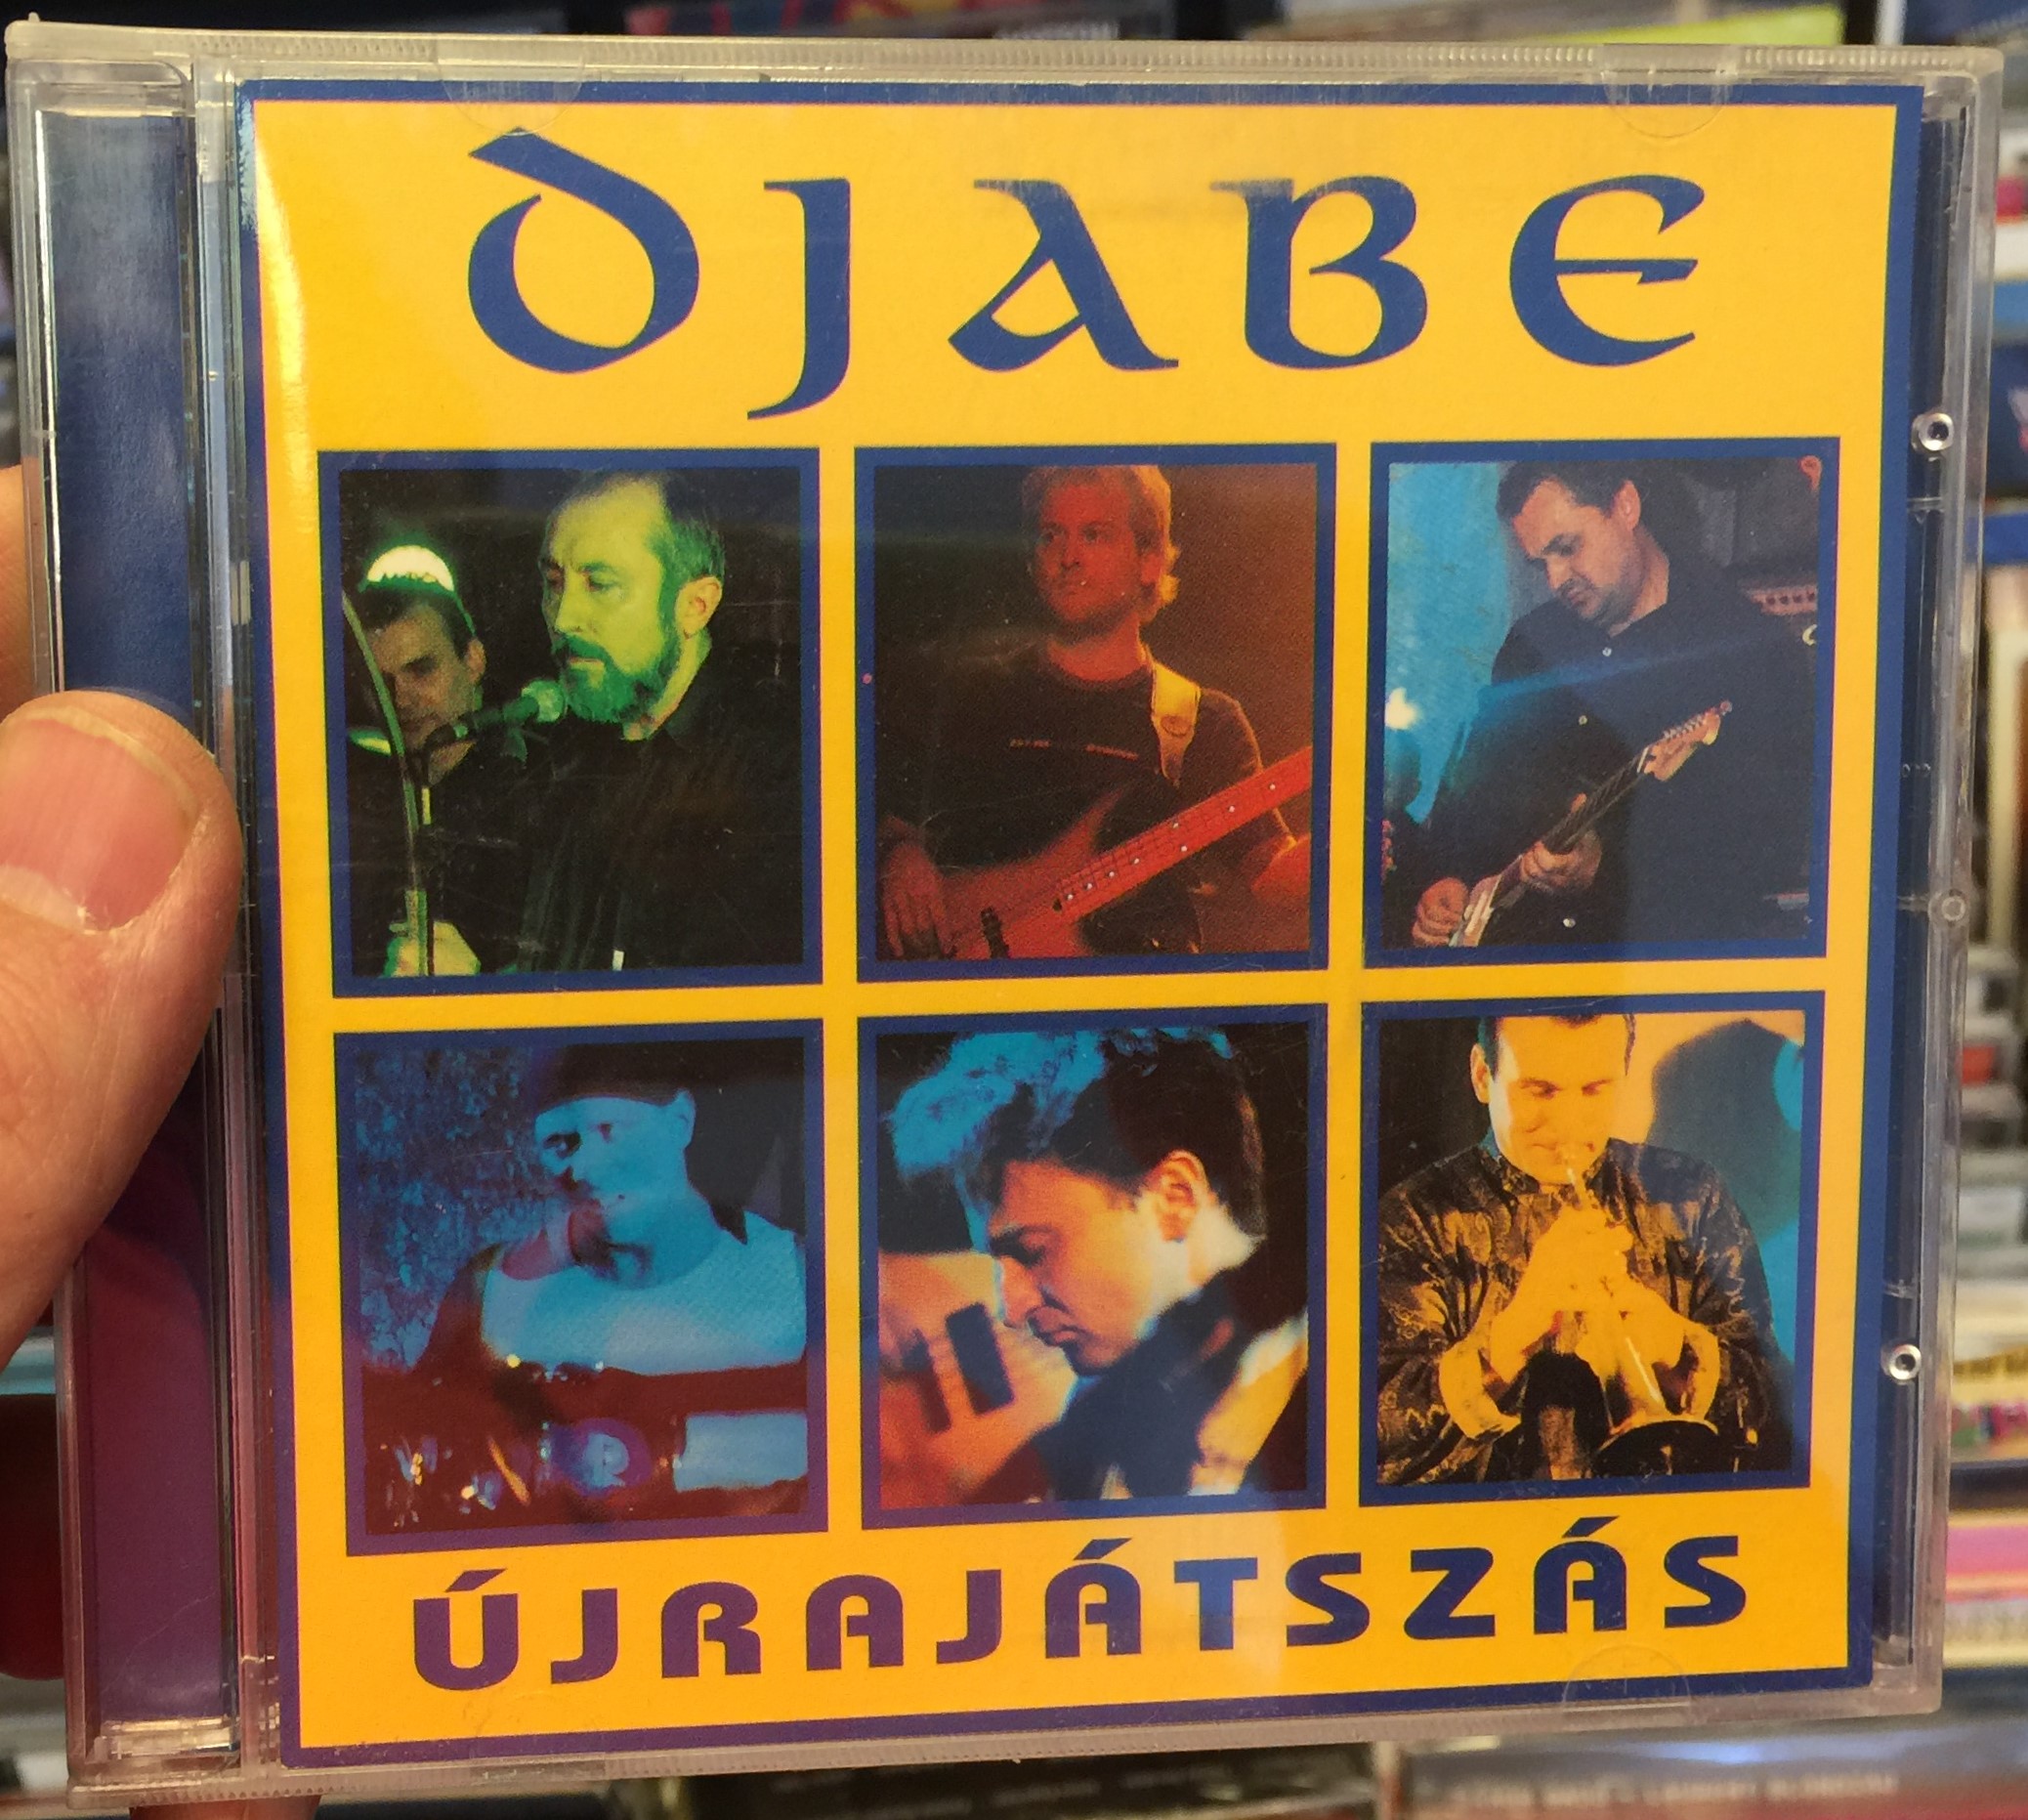 djabe-jraj-tsz-s-gramy-records-audio-cd-2001-gr-023-1-.jpg